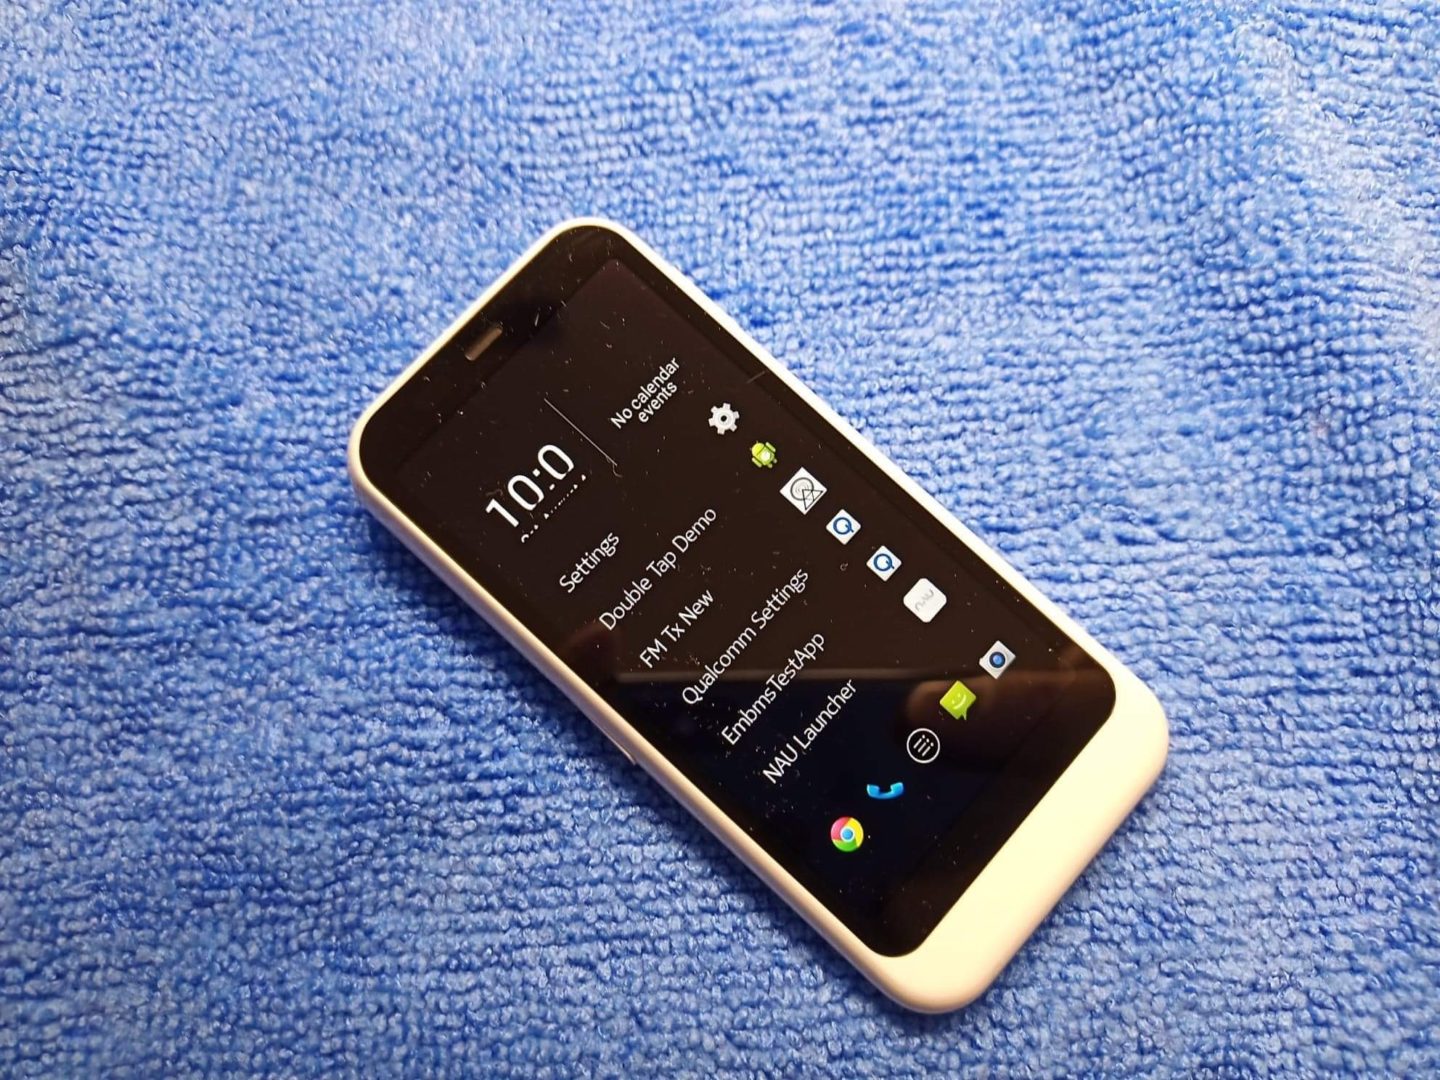 Unreleased Nokia Ion Mini prototype leaked - releasing soon?